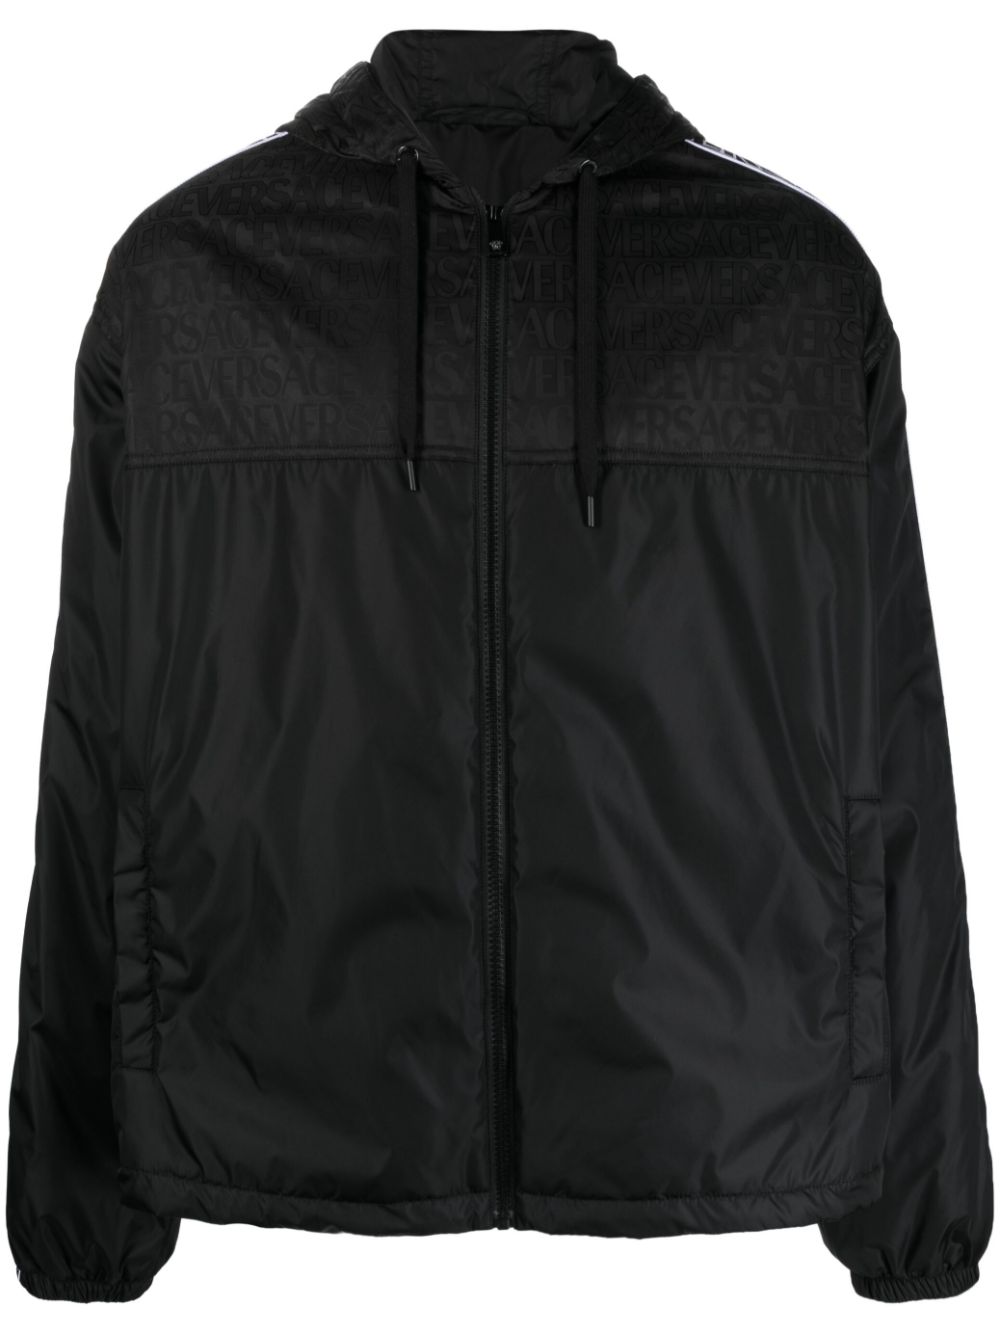 VERSACE Jacquard-Logo Hooded Jacket for Men